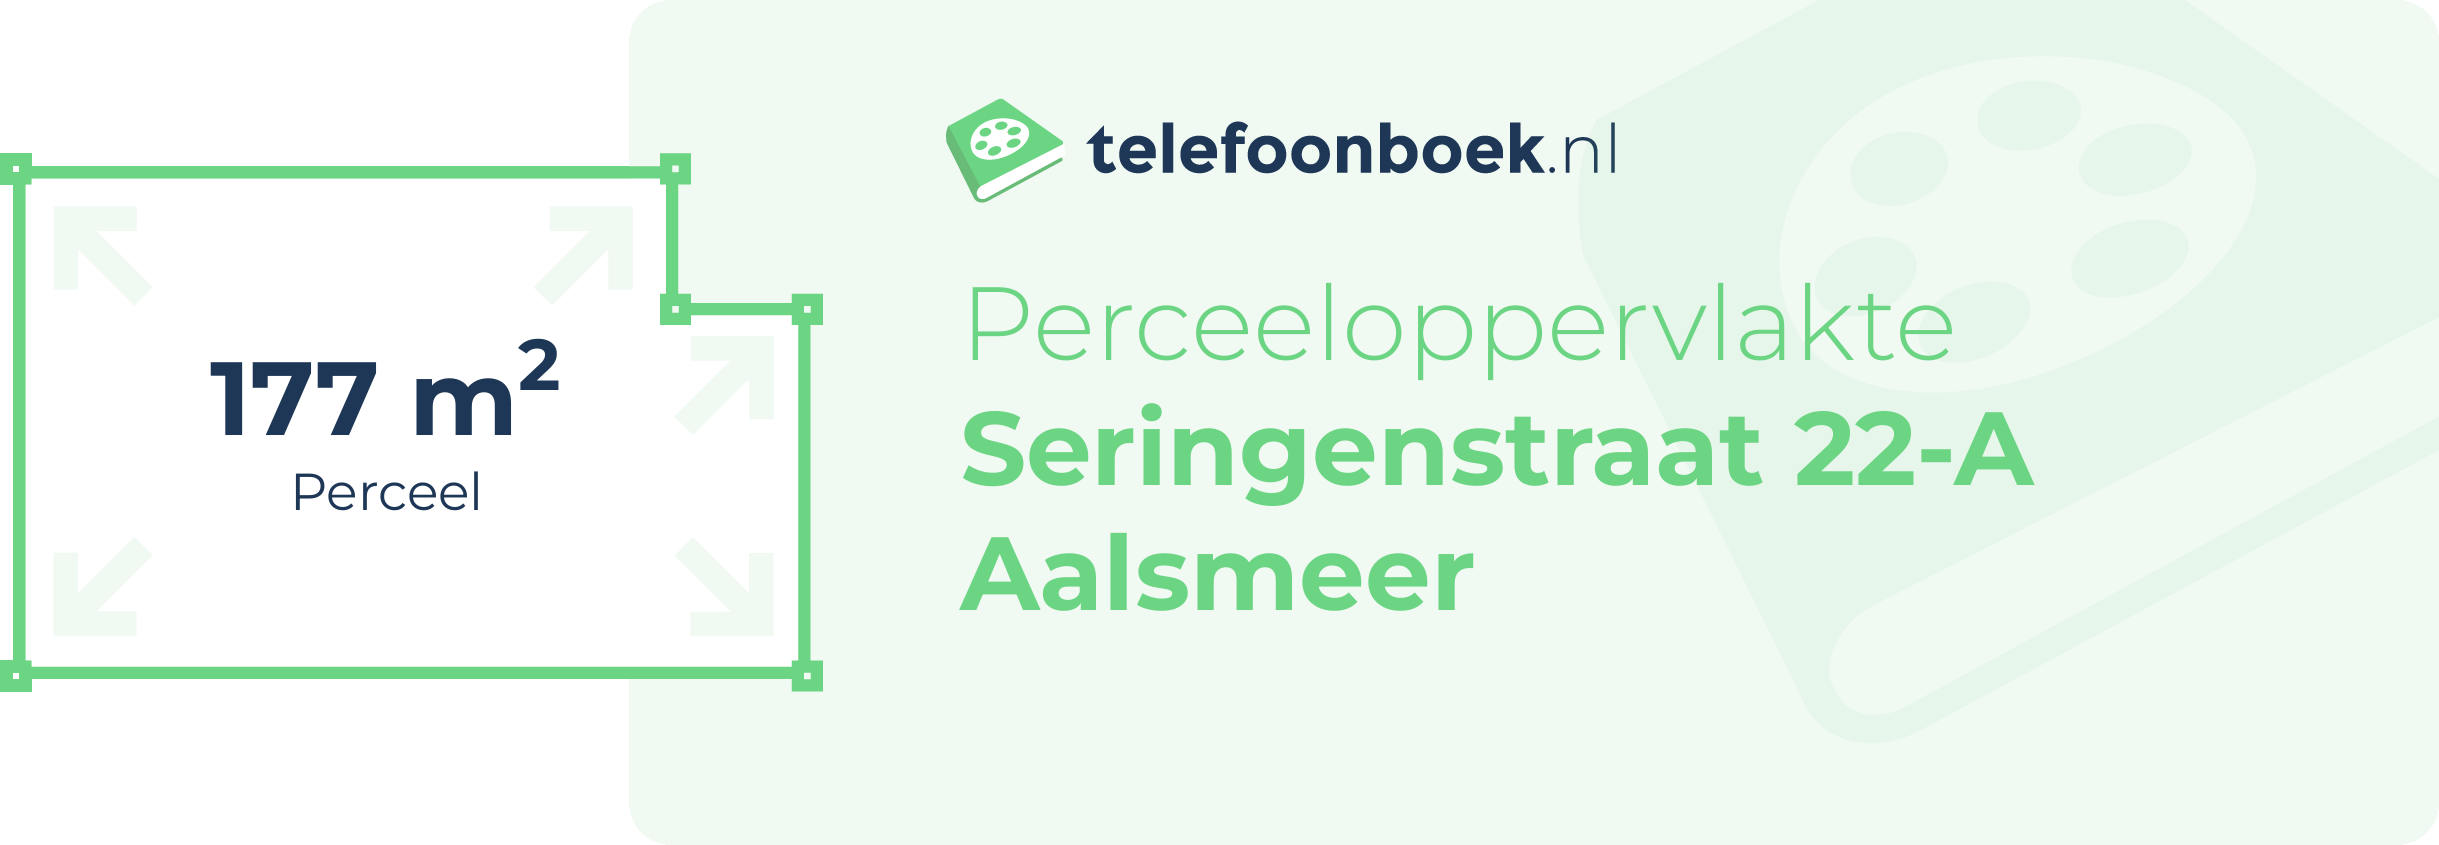 Perceeloppervlakte Seringenstraat 22-A Aalsmeer